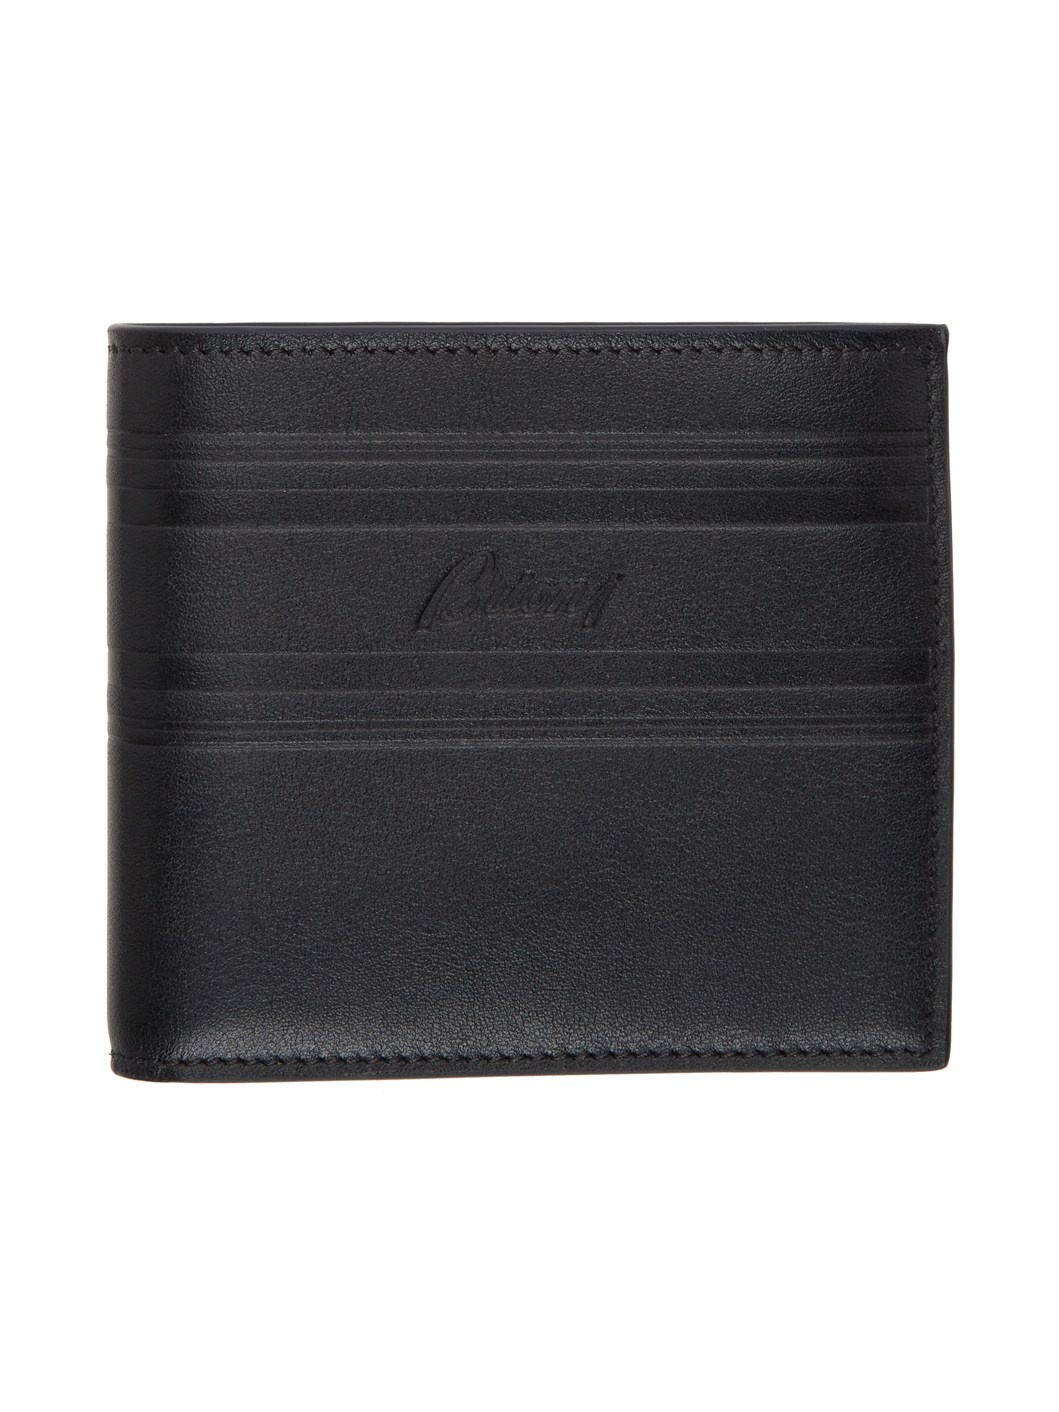 Black & Navy Classic Wallet - 1